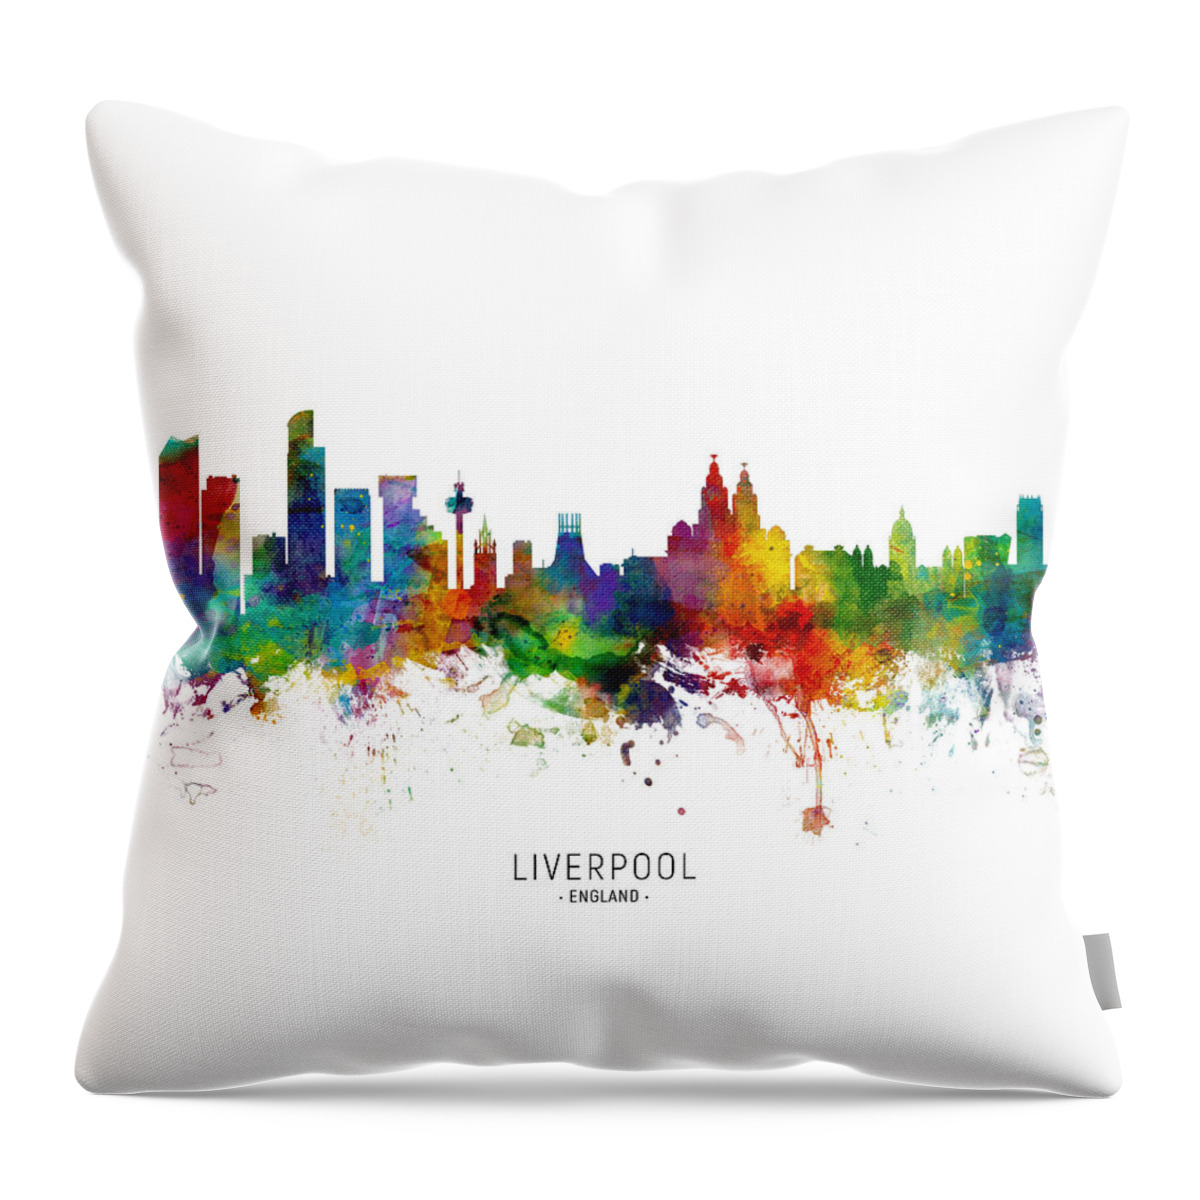 Liverpool Throw Pillow featuring the digital art Liverpool England Skyline by Michael Tompsett